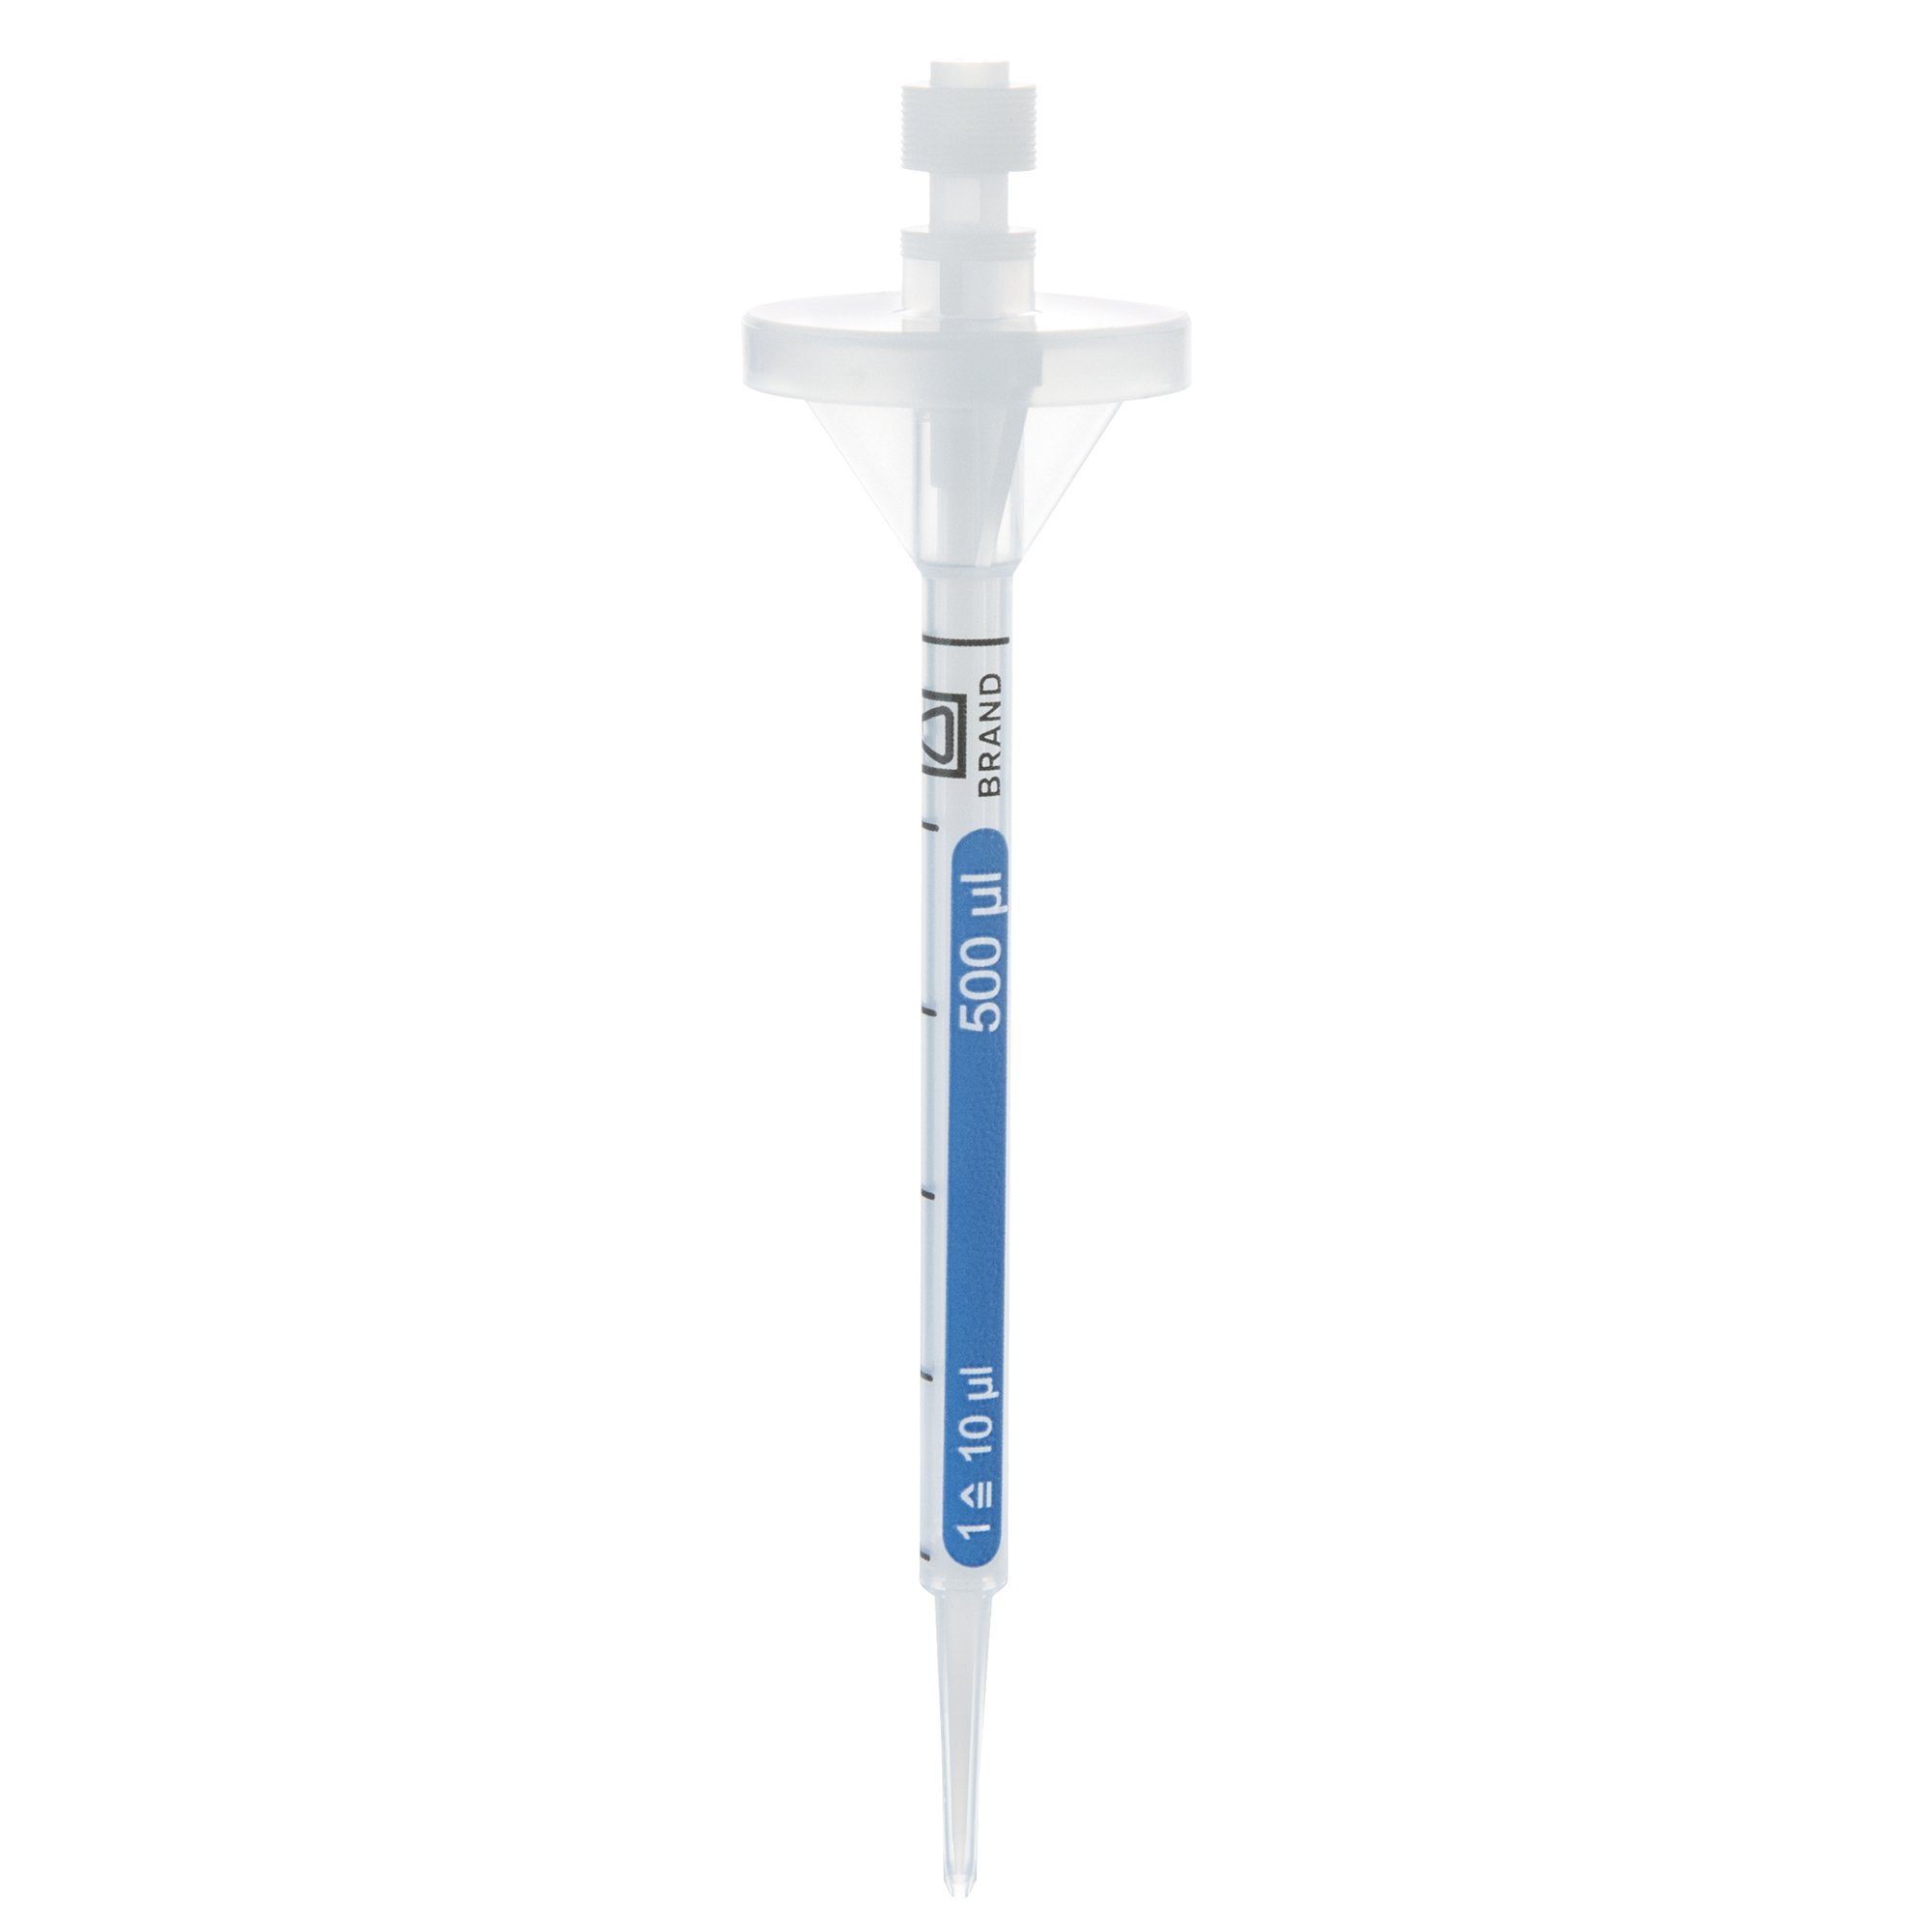 BrandTech BRAND PD-Tip II Syringe Tips - Non Sterile 0.5mL (Pack of 100)